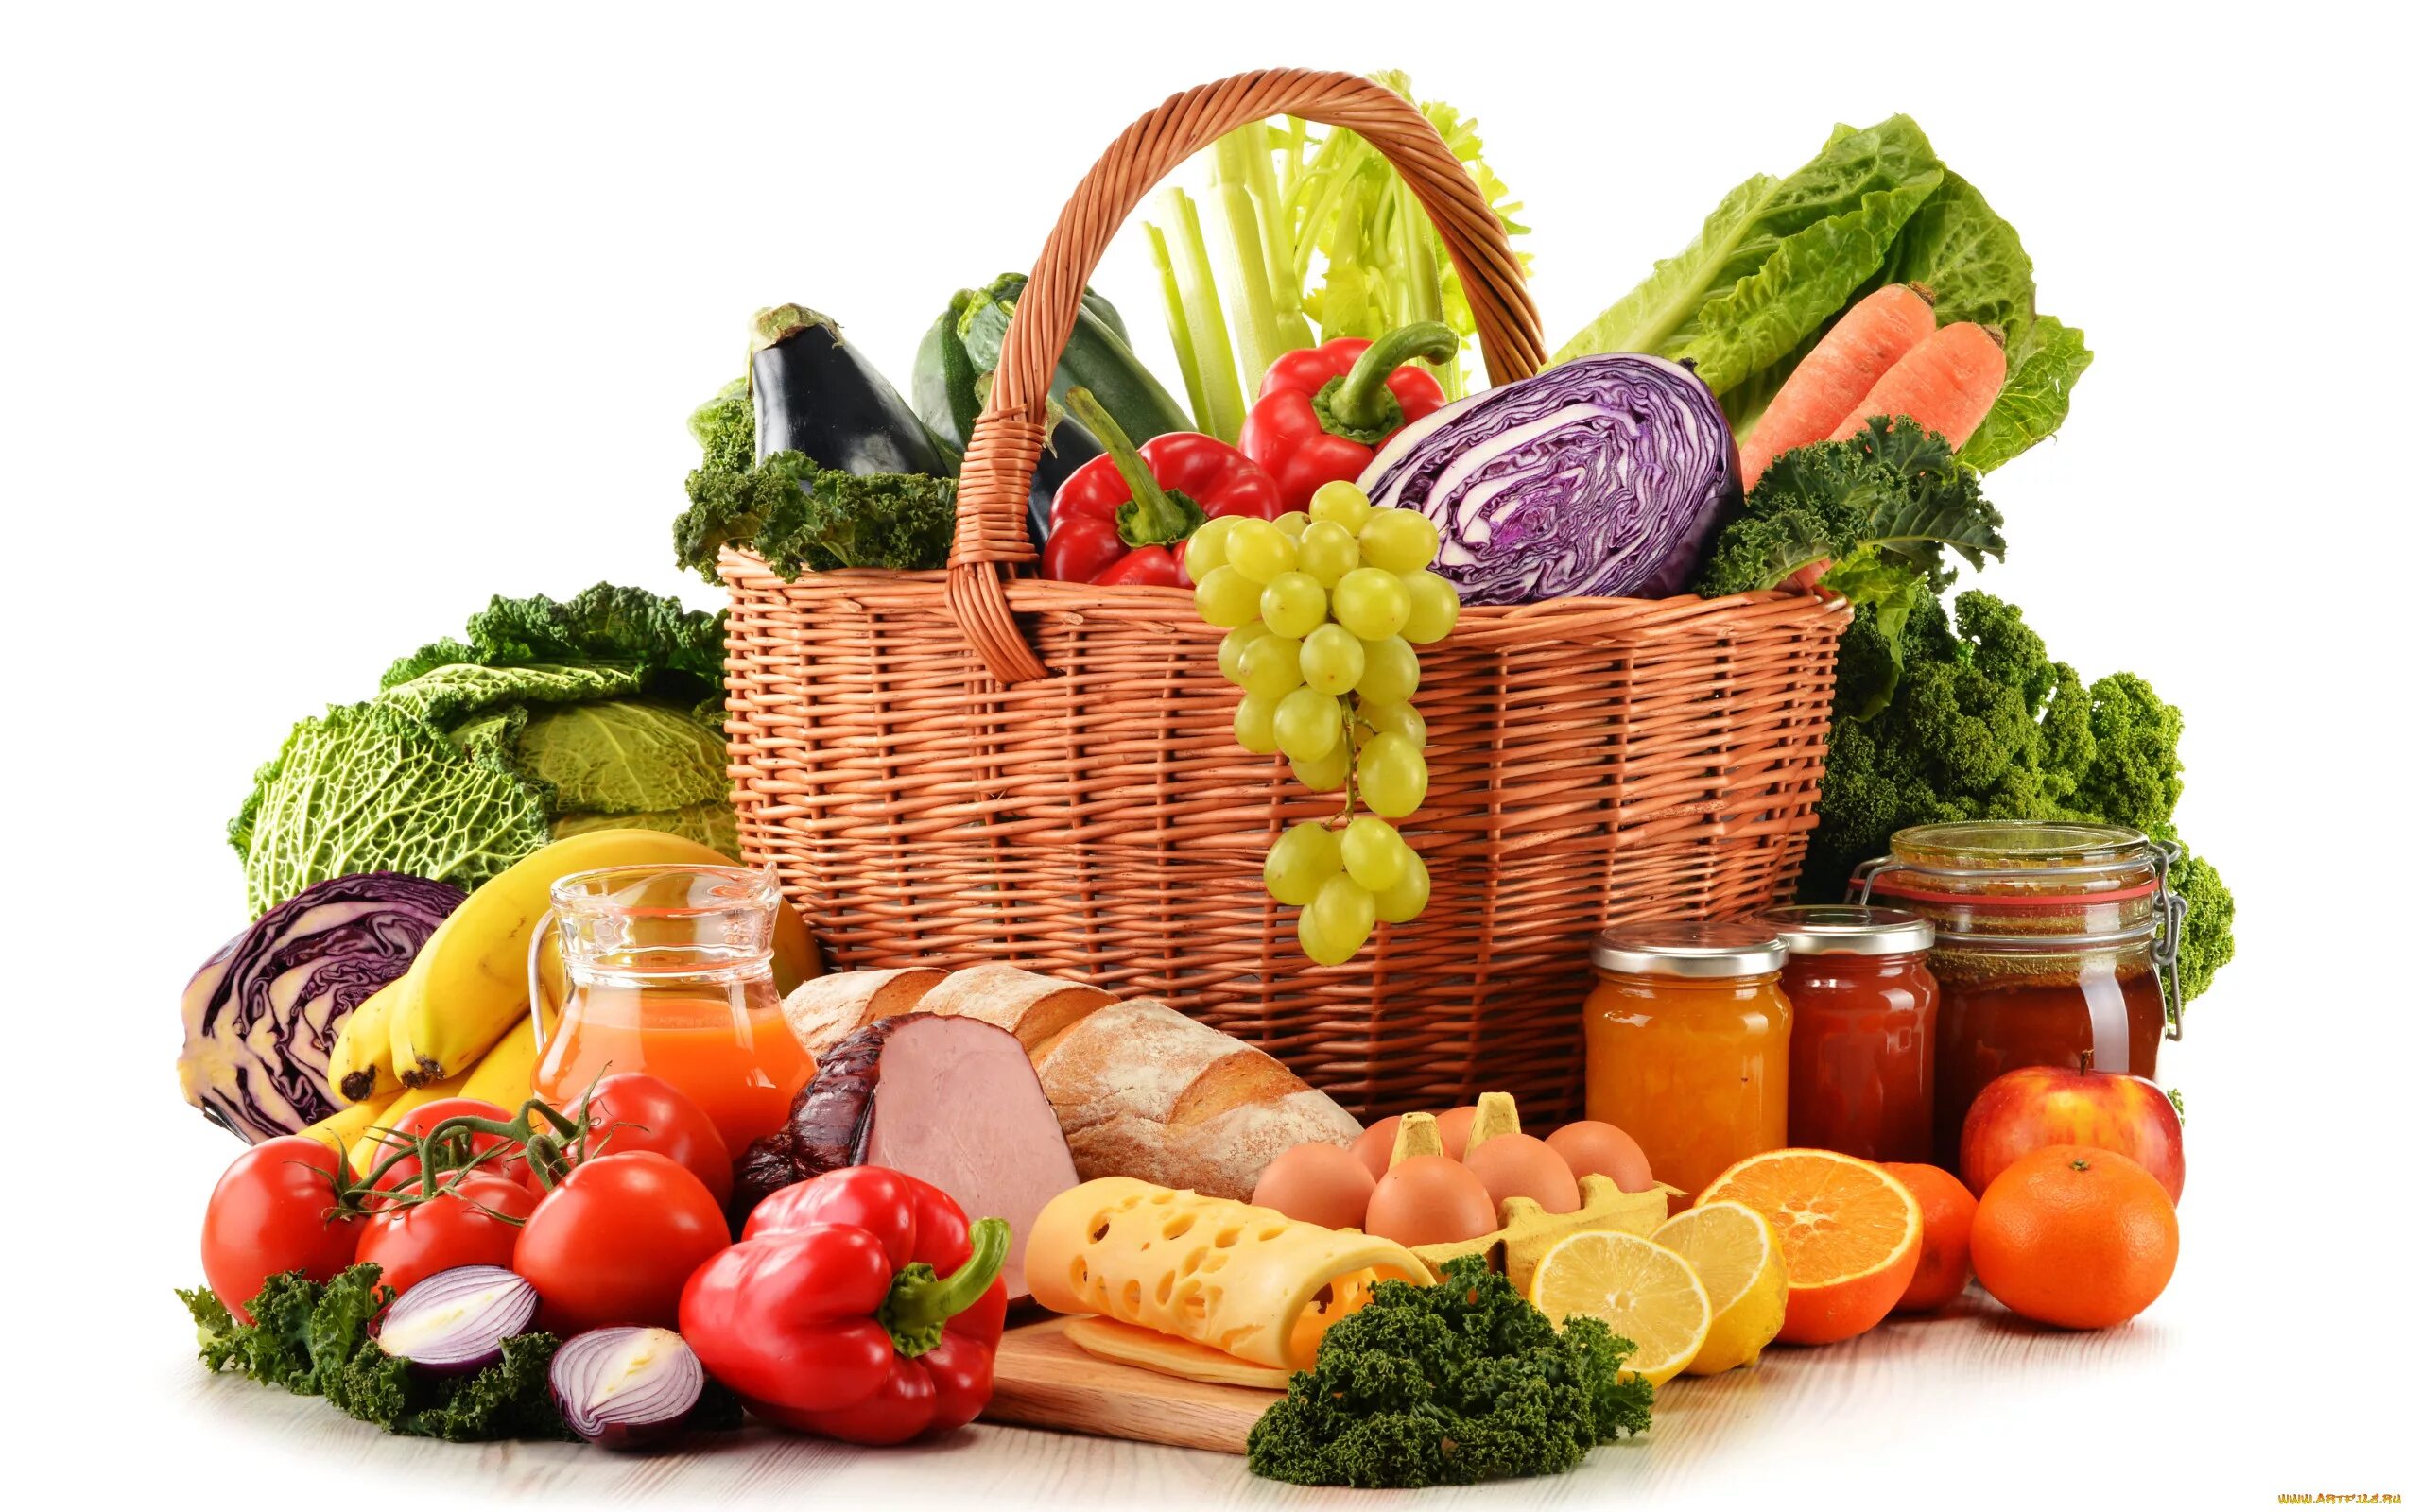 Овощи в ассортименте. Корзина с продуктами. Корзинка с продуктами. Корзина с овощами и фруктами. Продукты питания овощи.